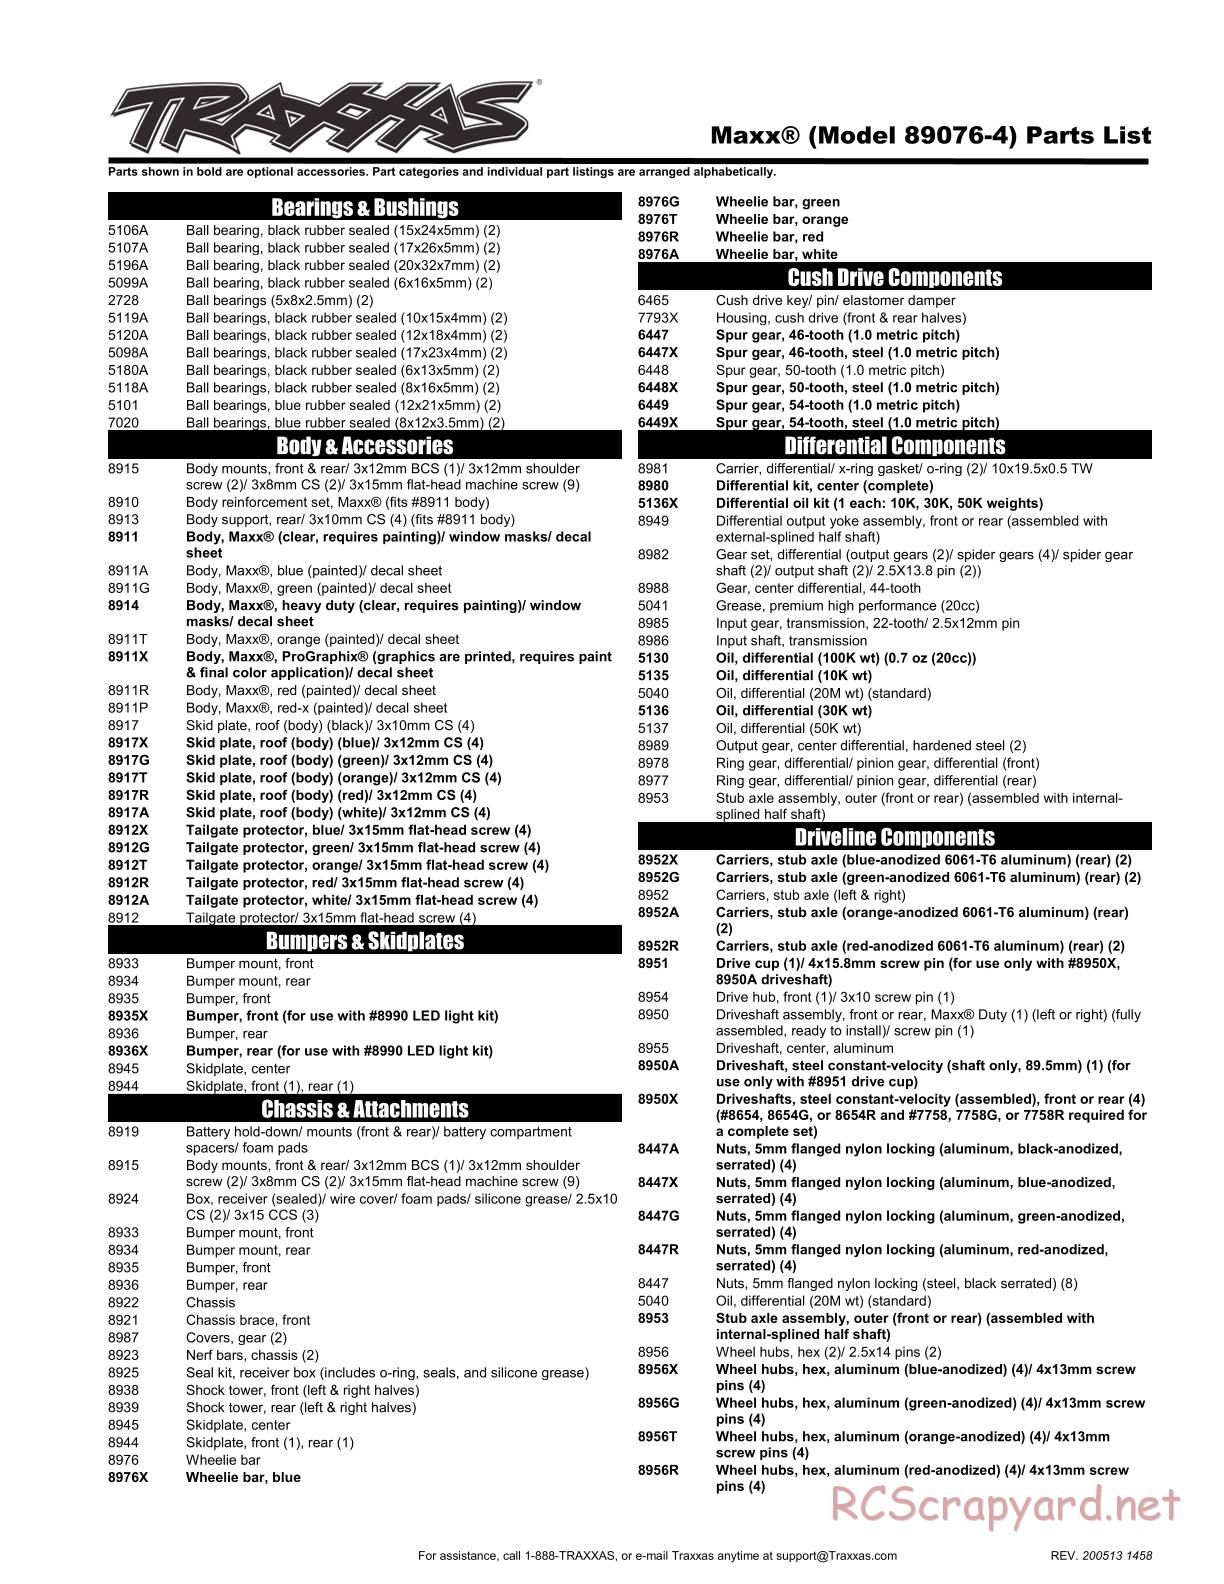 Traxxas - Maxx - Parts List - Page 1